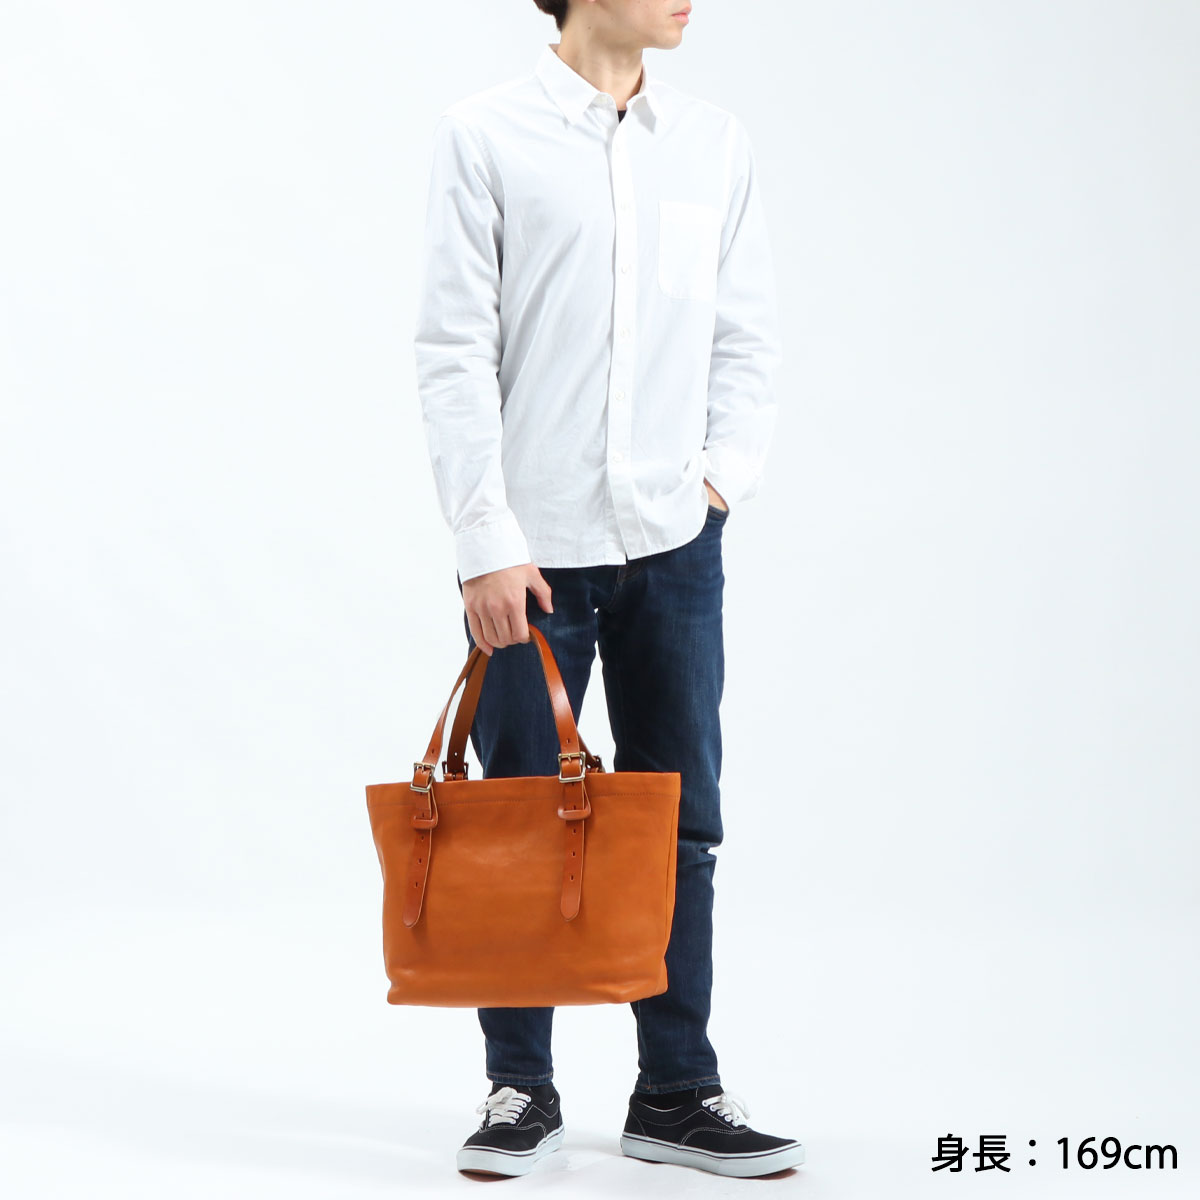 SLOW スロウ rubono tote bag S size トートバッグ 300S26CG｜【正規